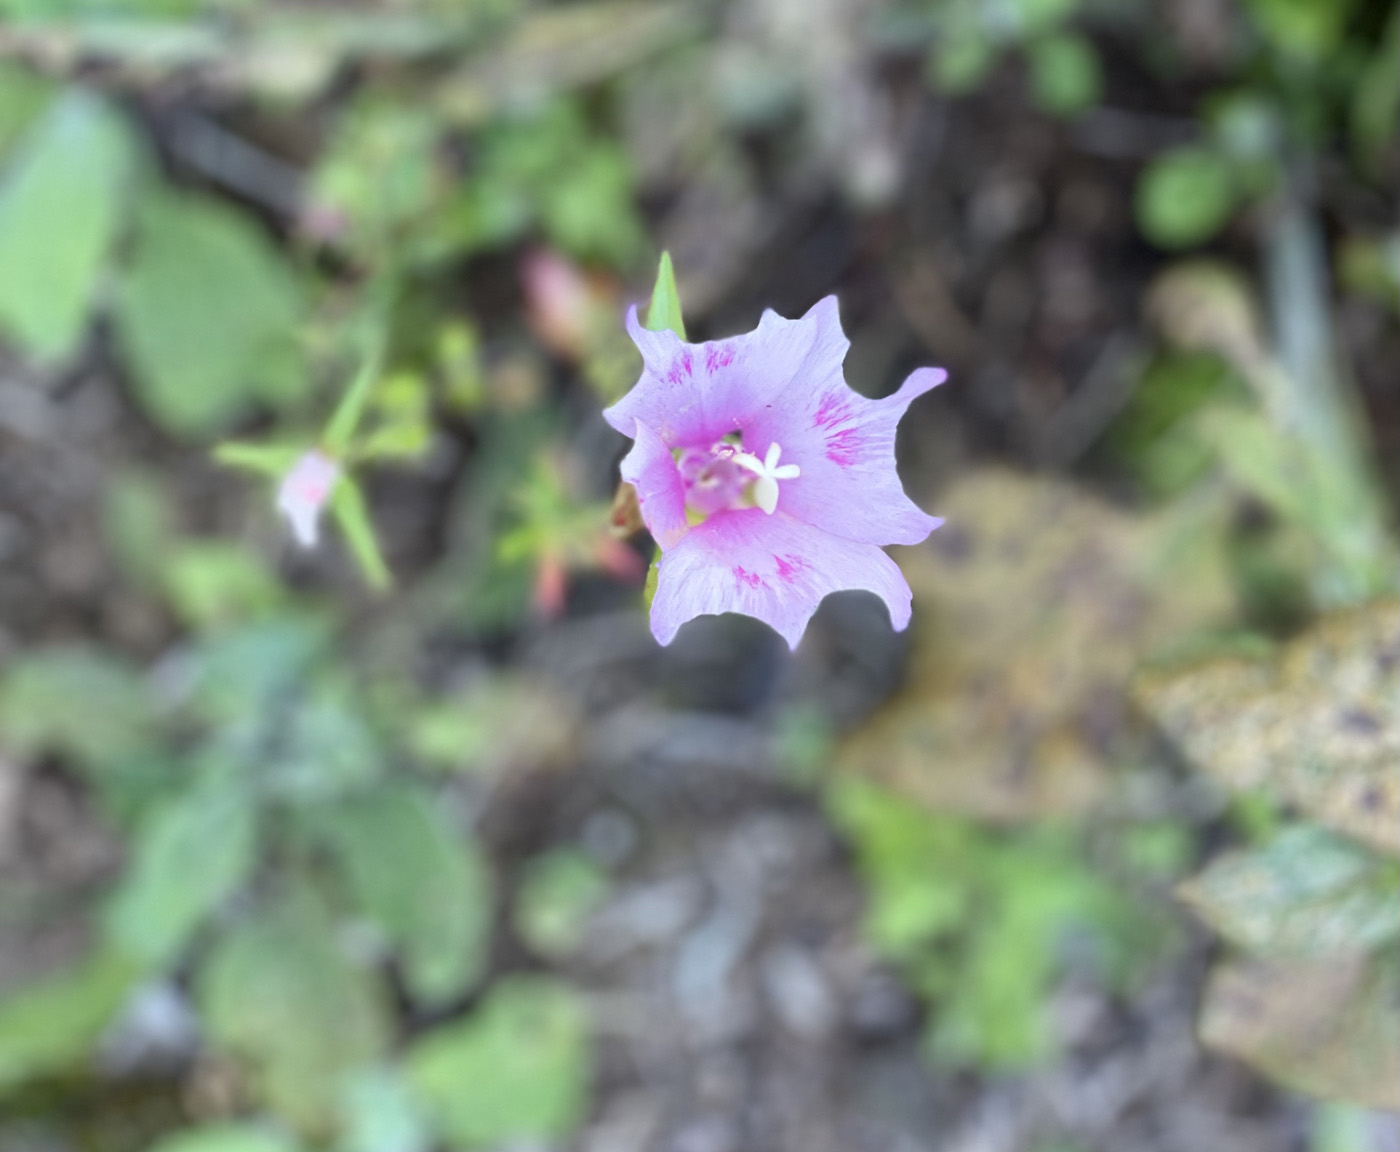 Marshmallow flower in Nicole Apelians garden